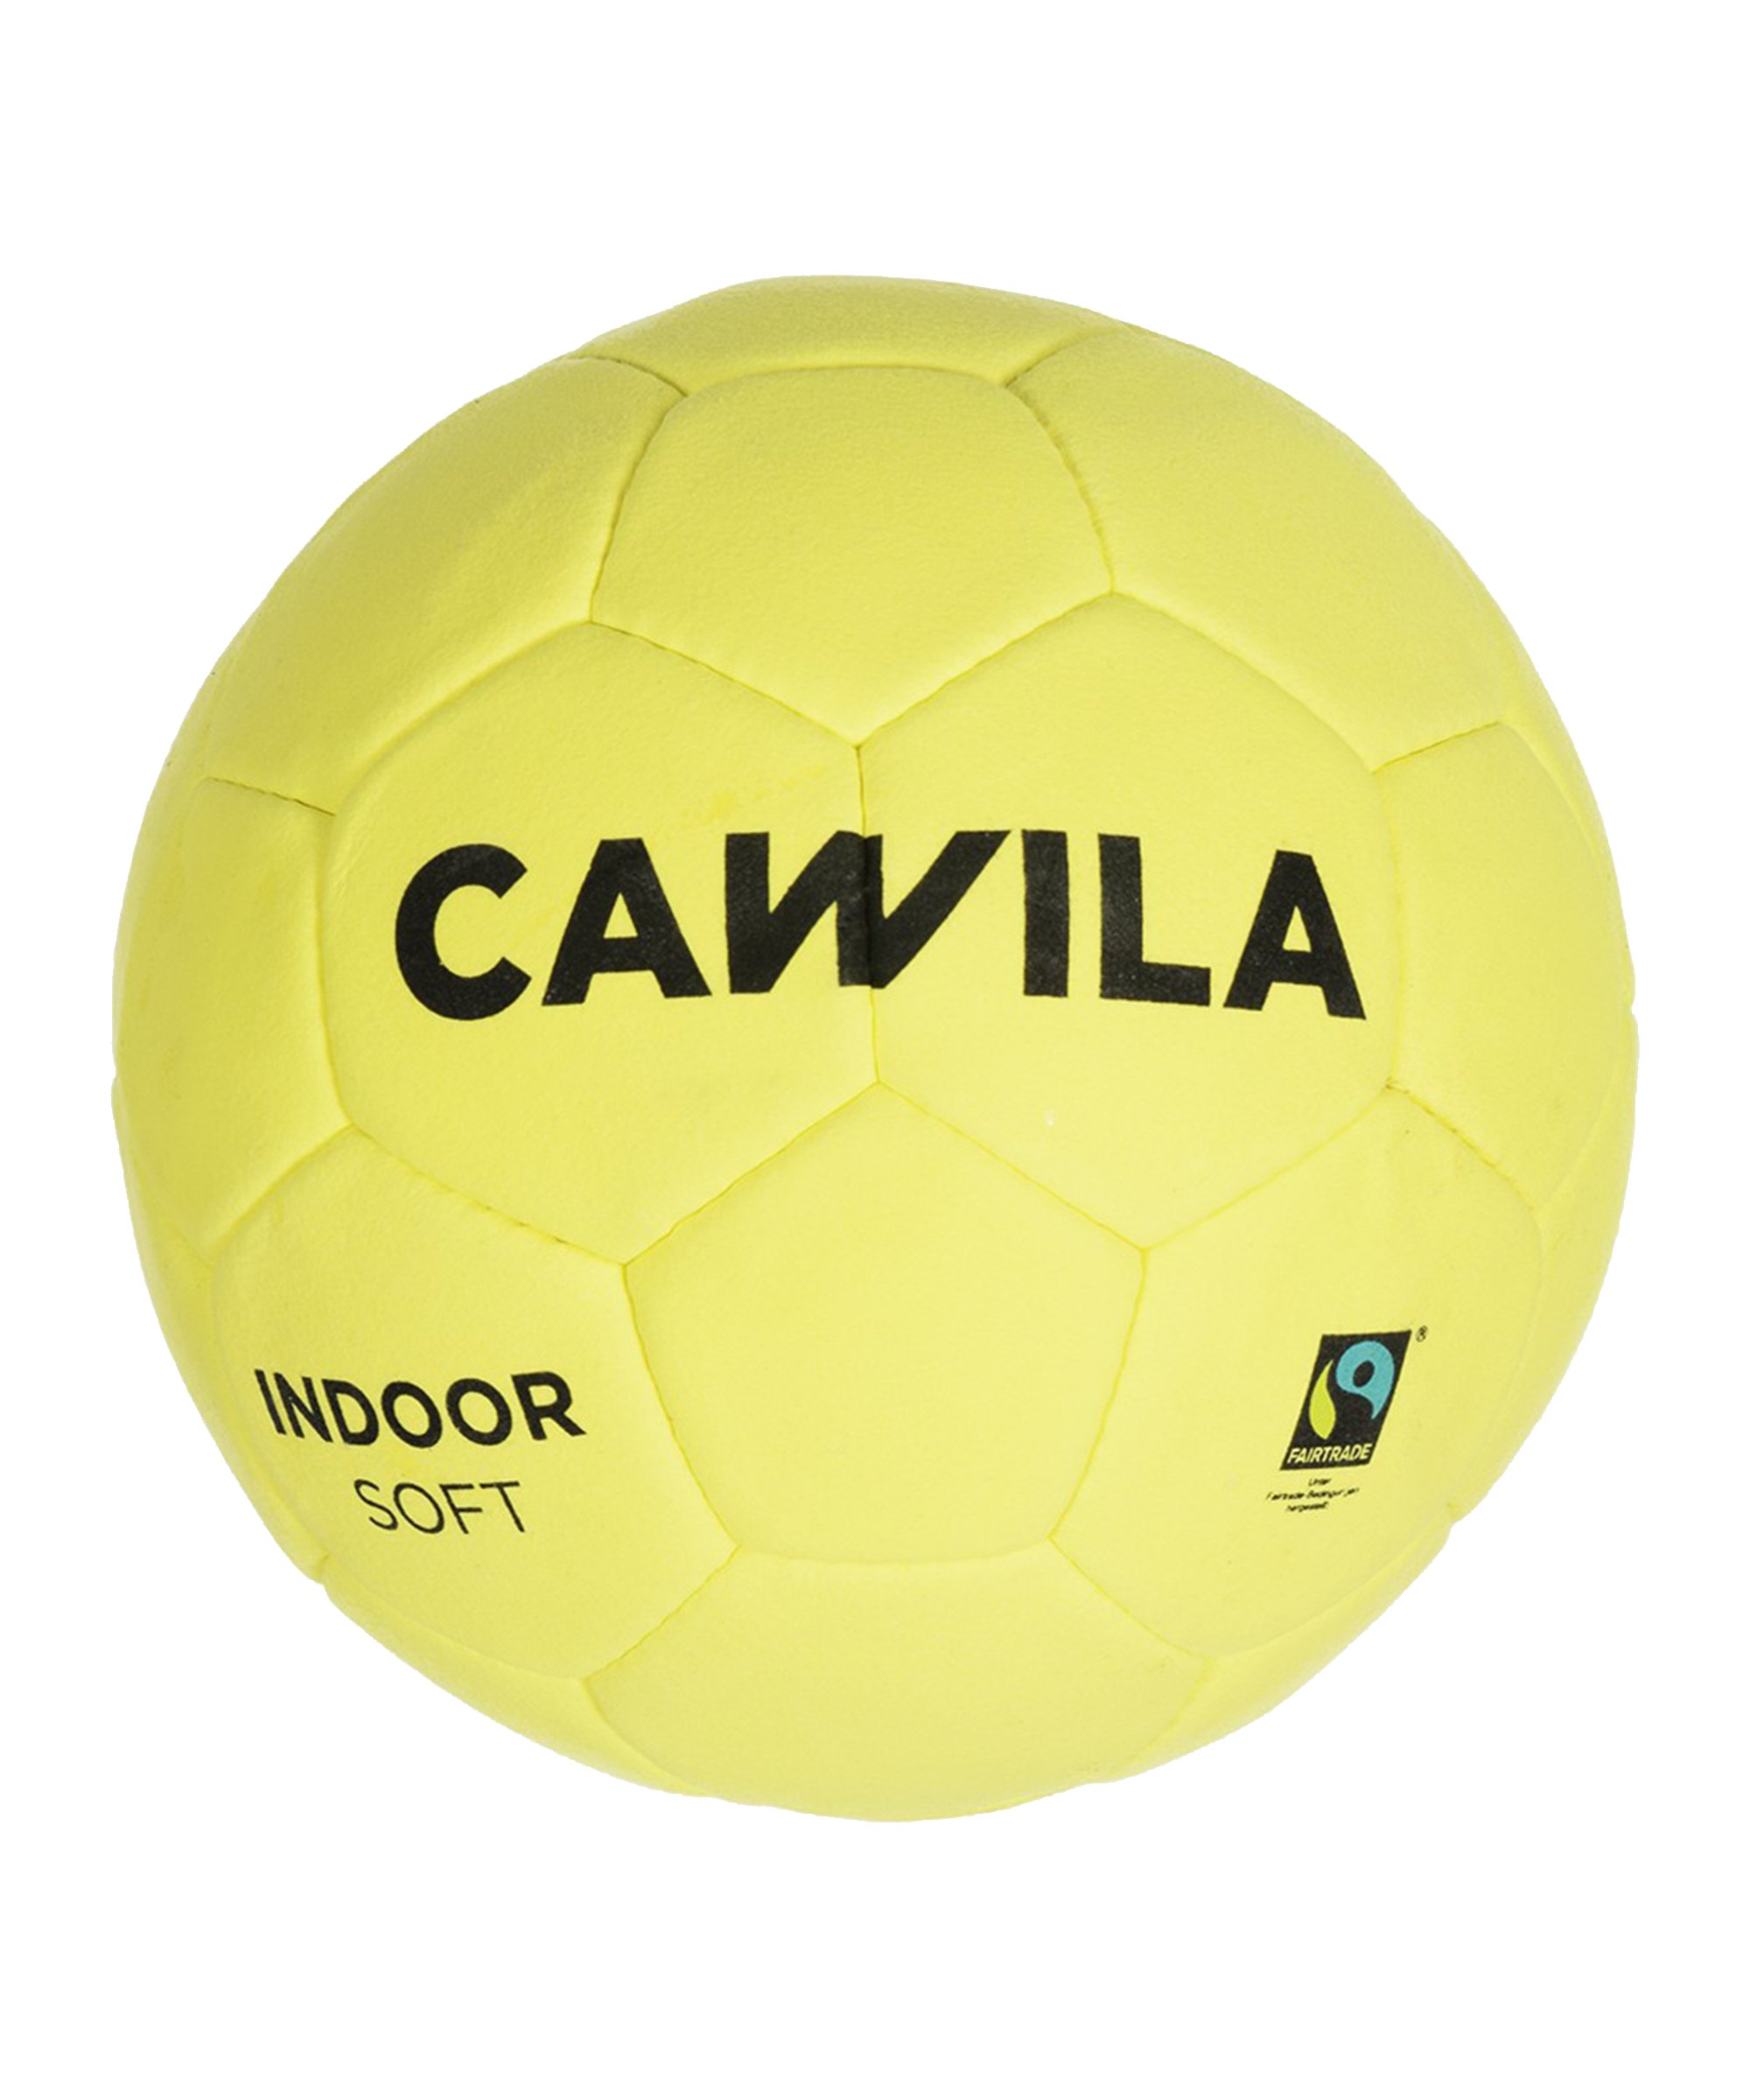 Cawila Fussball Indoor Soft 4 Gelb - gelb